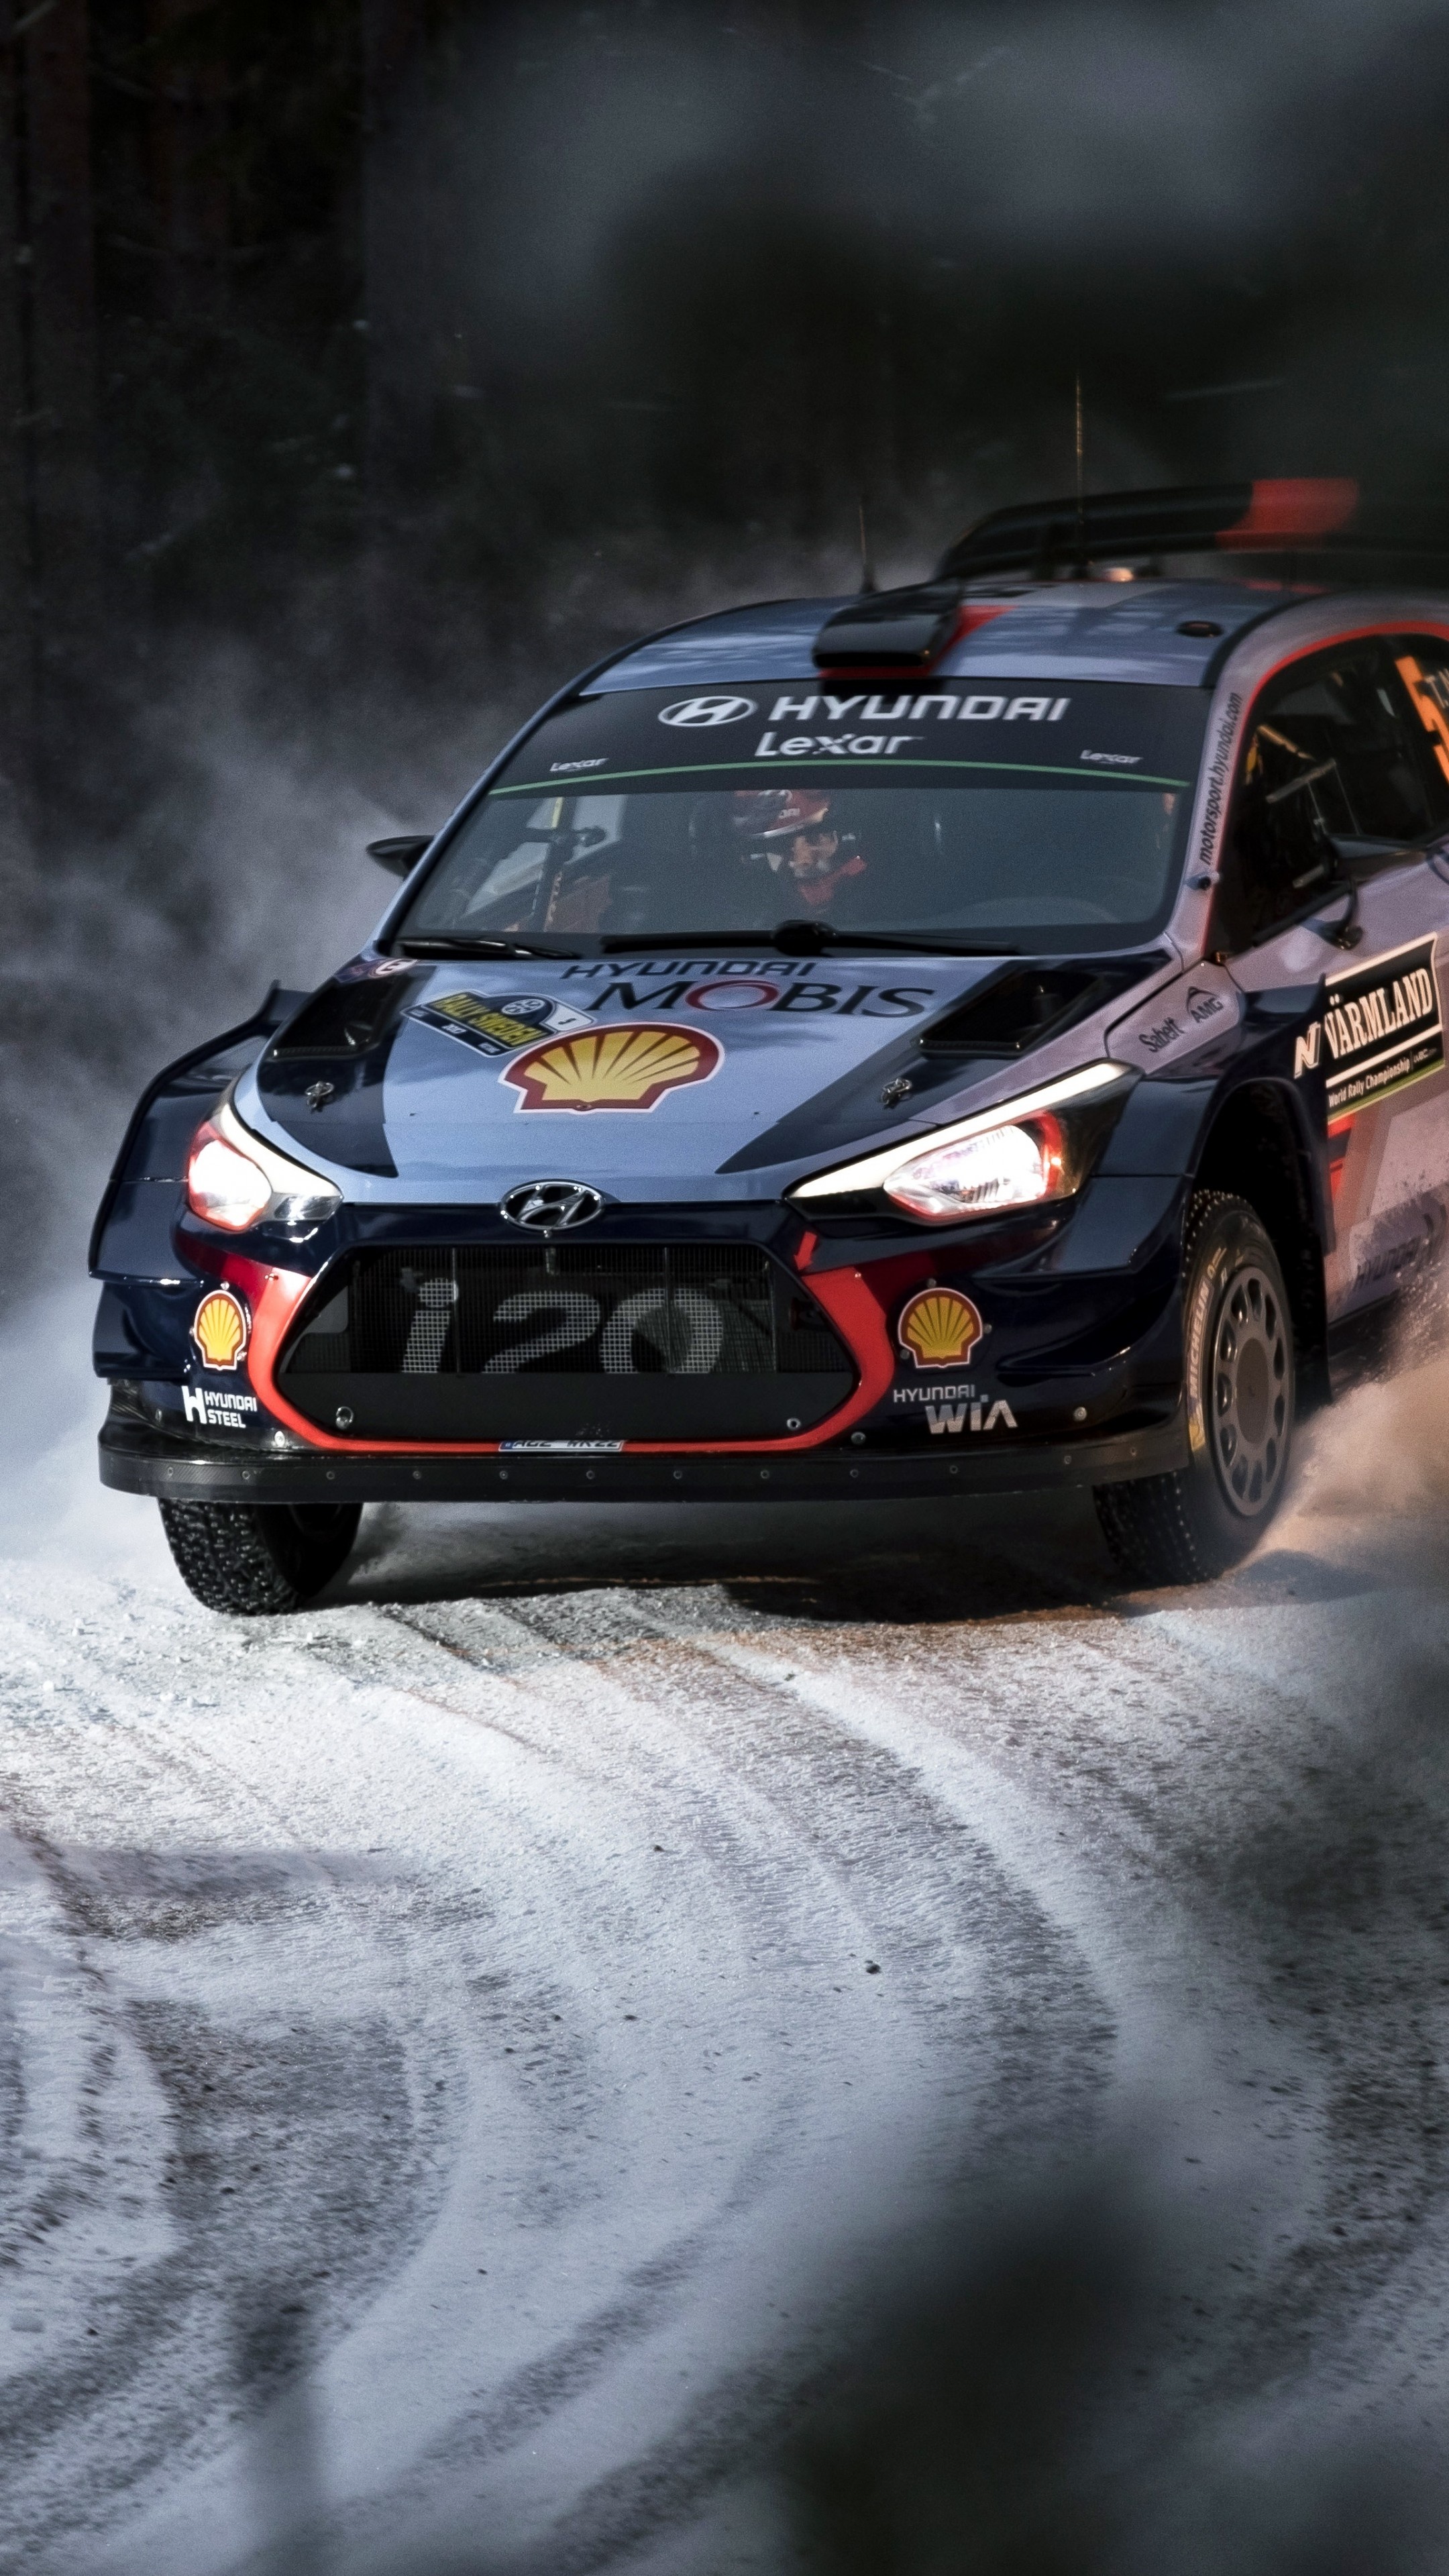 Rallycross: Power Sliding, Ice Storm, Racing Car, Studded Tires, Hyundai Lexar. 2160x3840 4K Wallpaper.